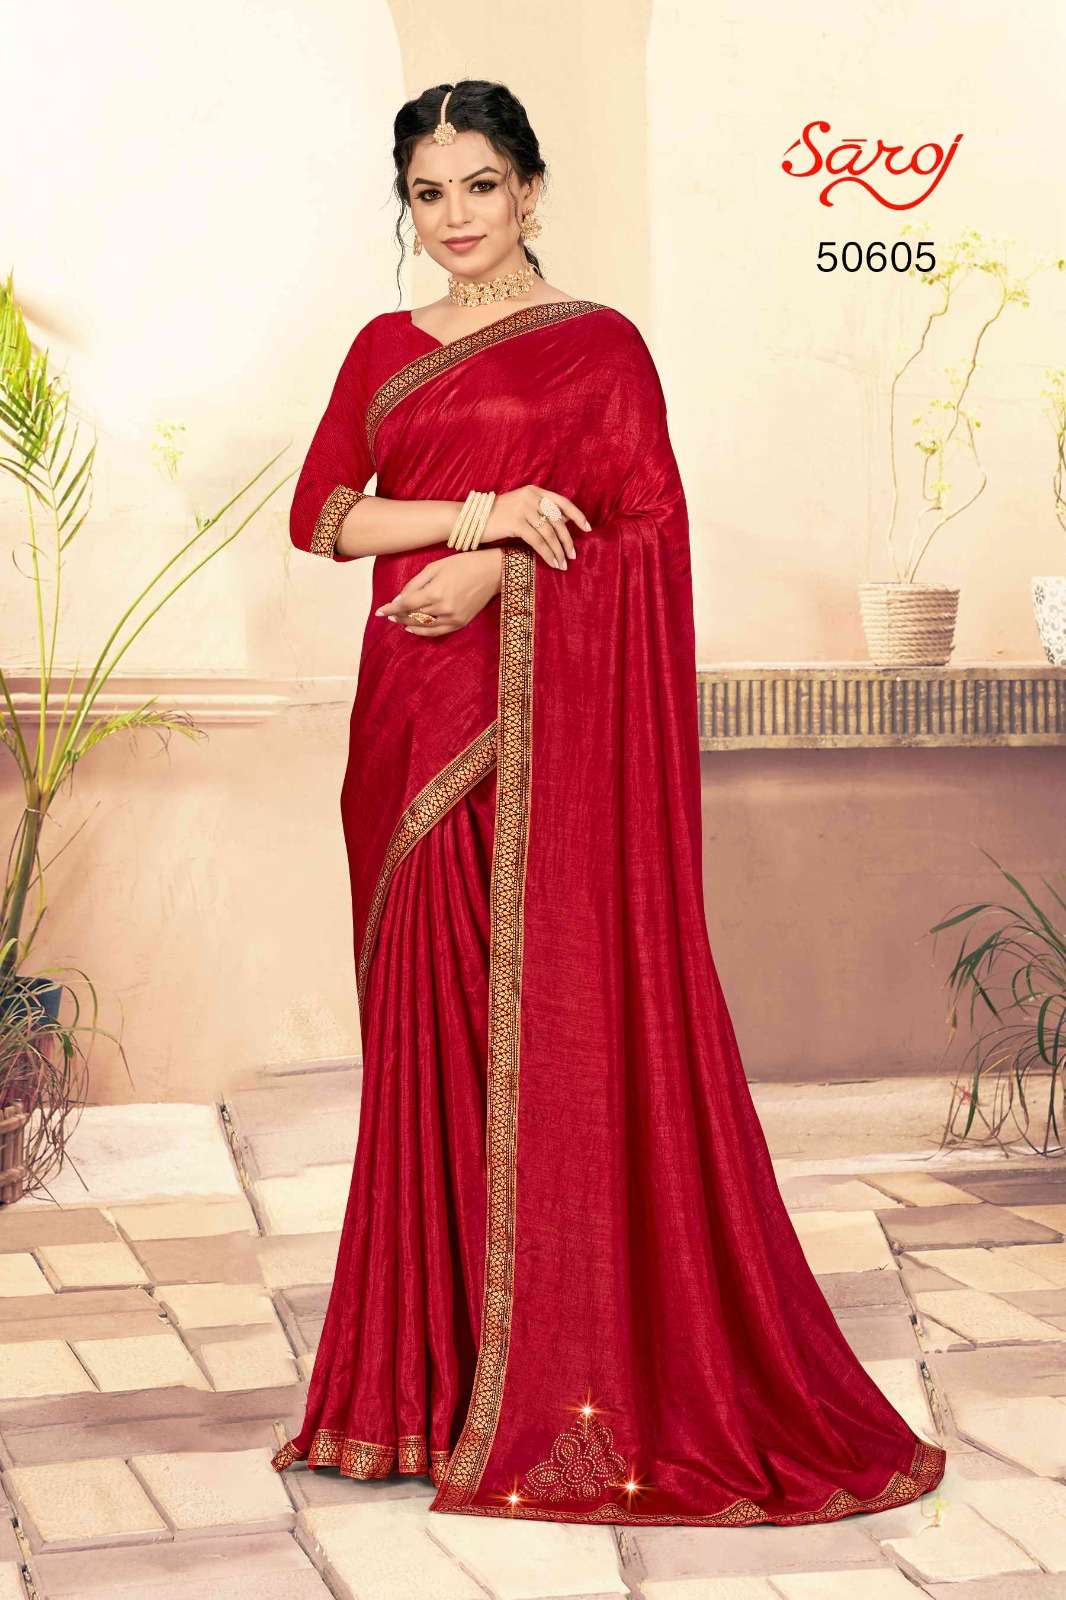 Saroj textile presents Fruit combo-3 Designer casual sarees catalogue